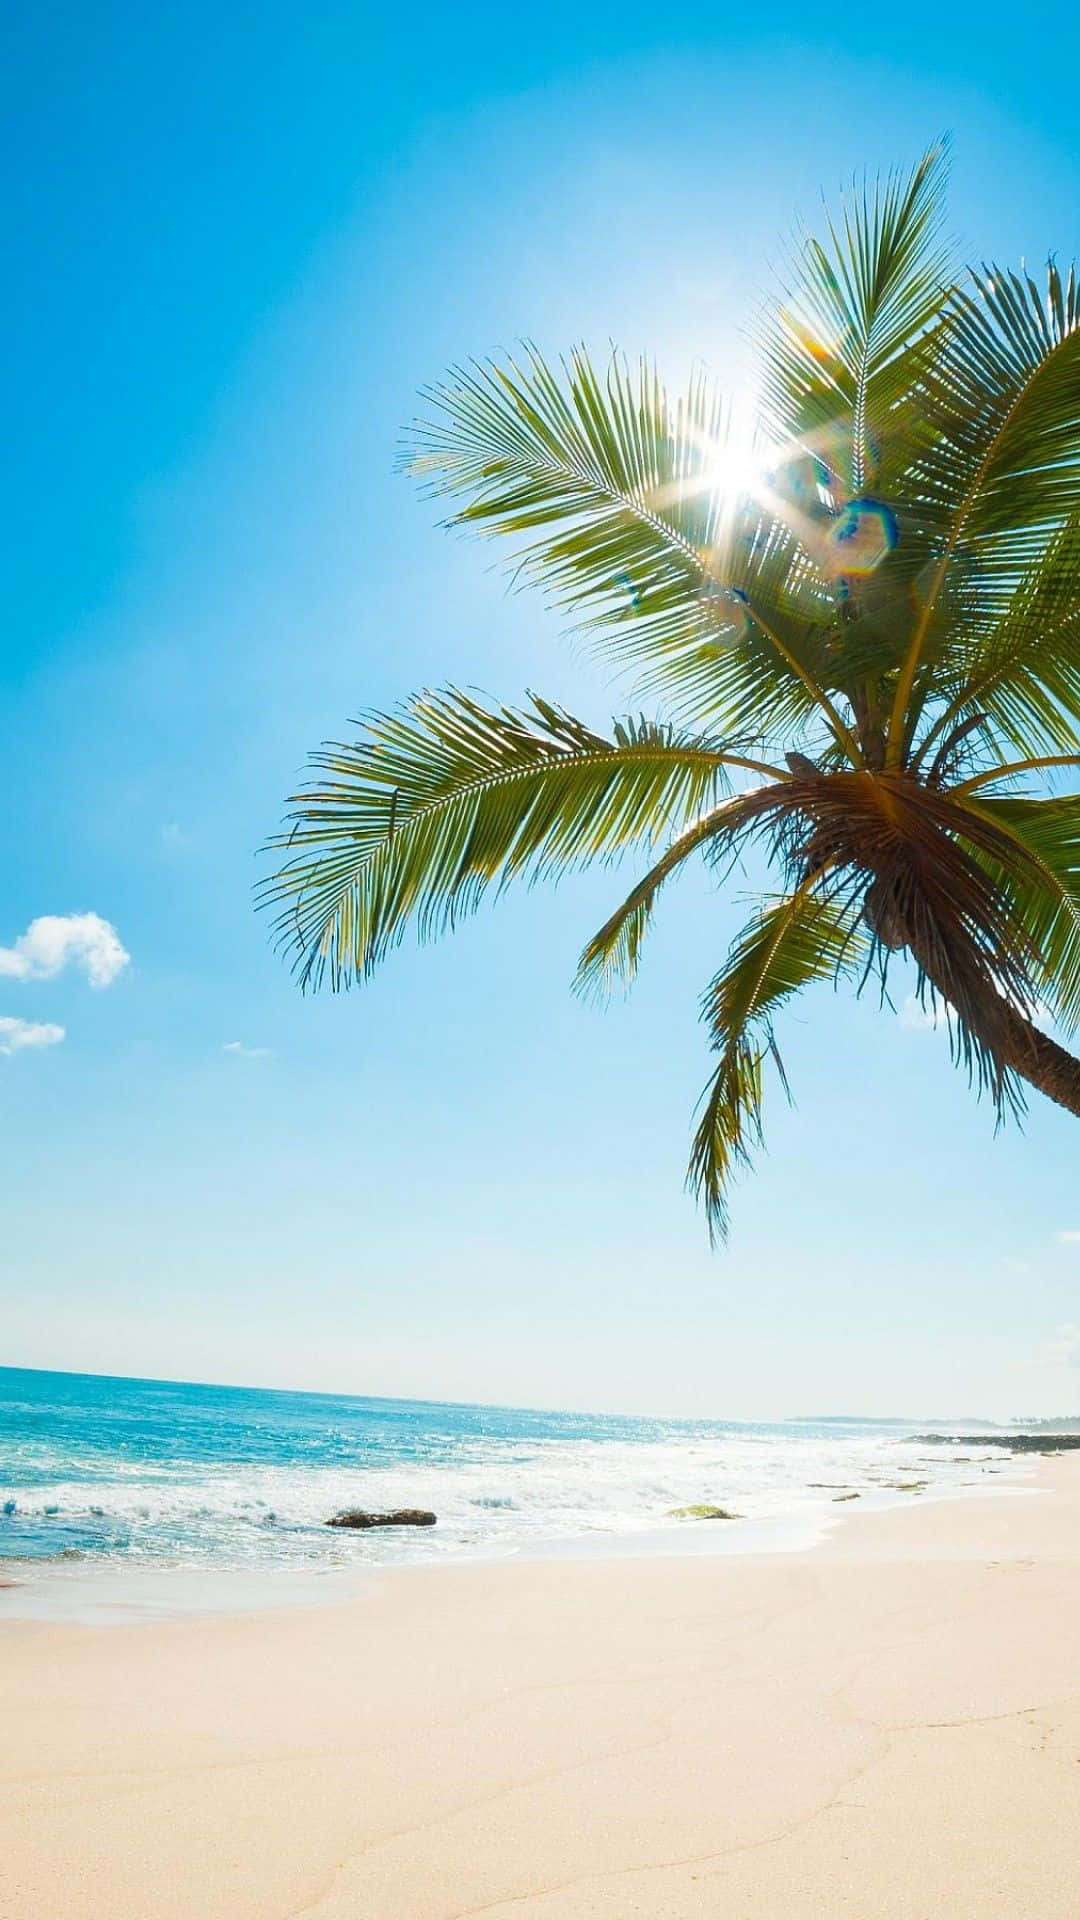 Enjoy the beautiful beach views with the perfect companion - Beach Phone Wallpaper